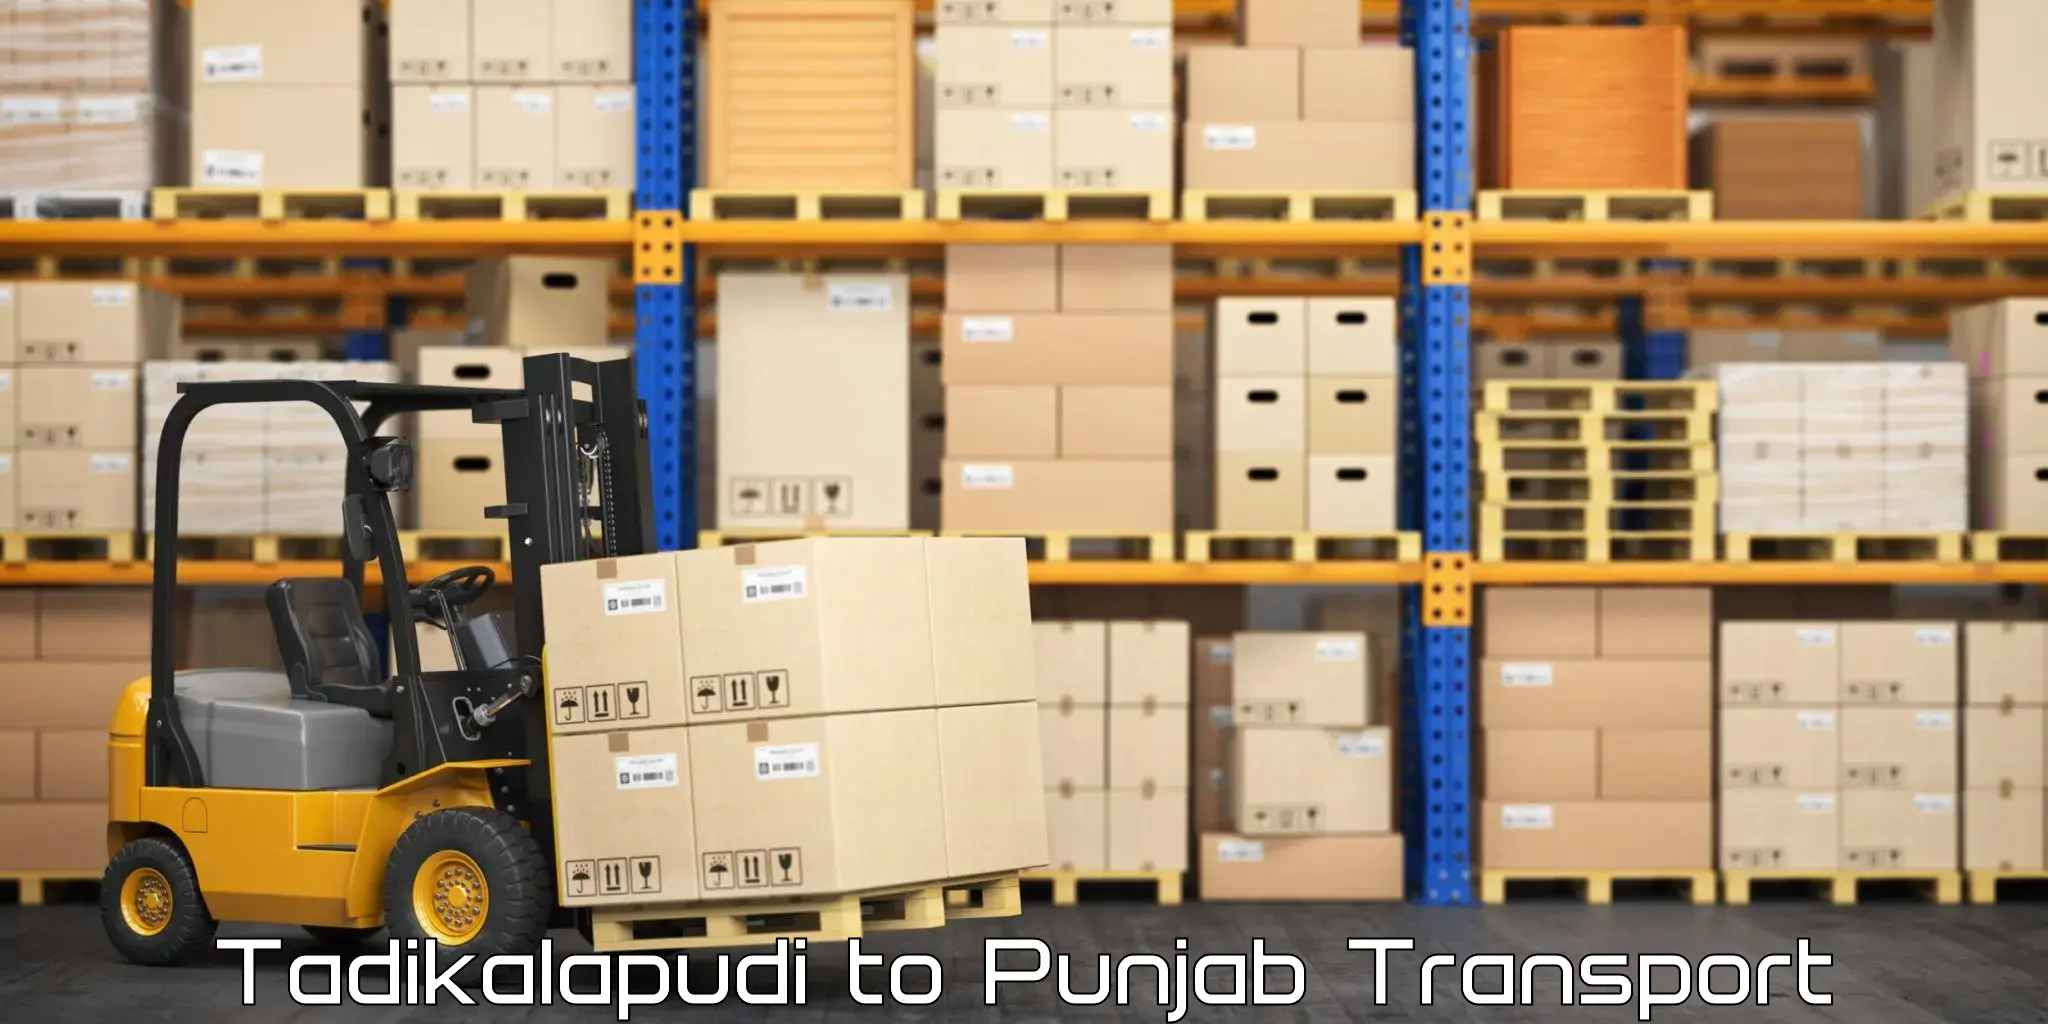 Truck transport companies in India Tadikalapudi to Ludhiana